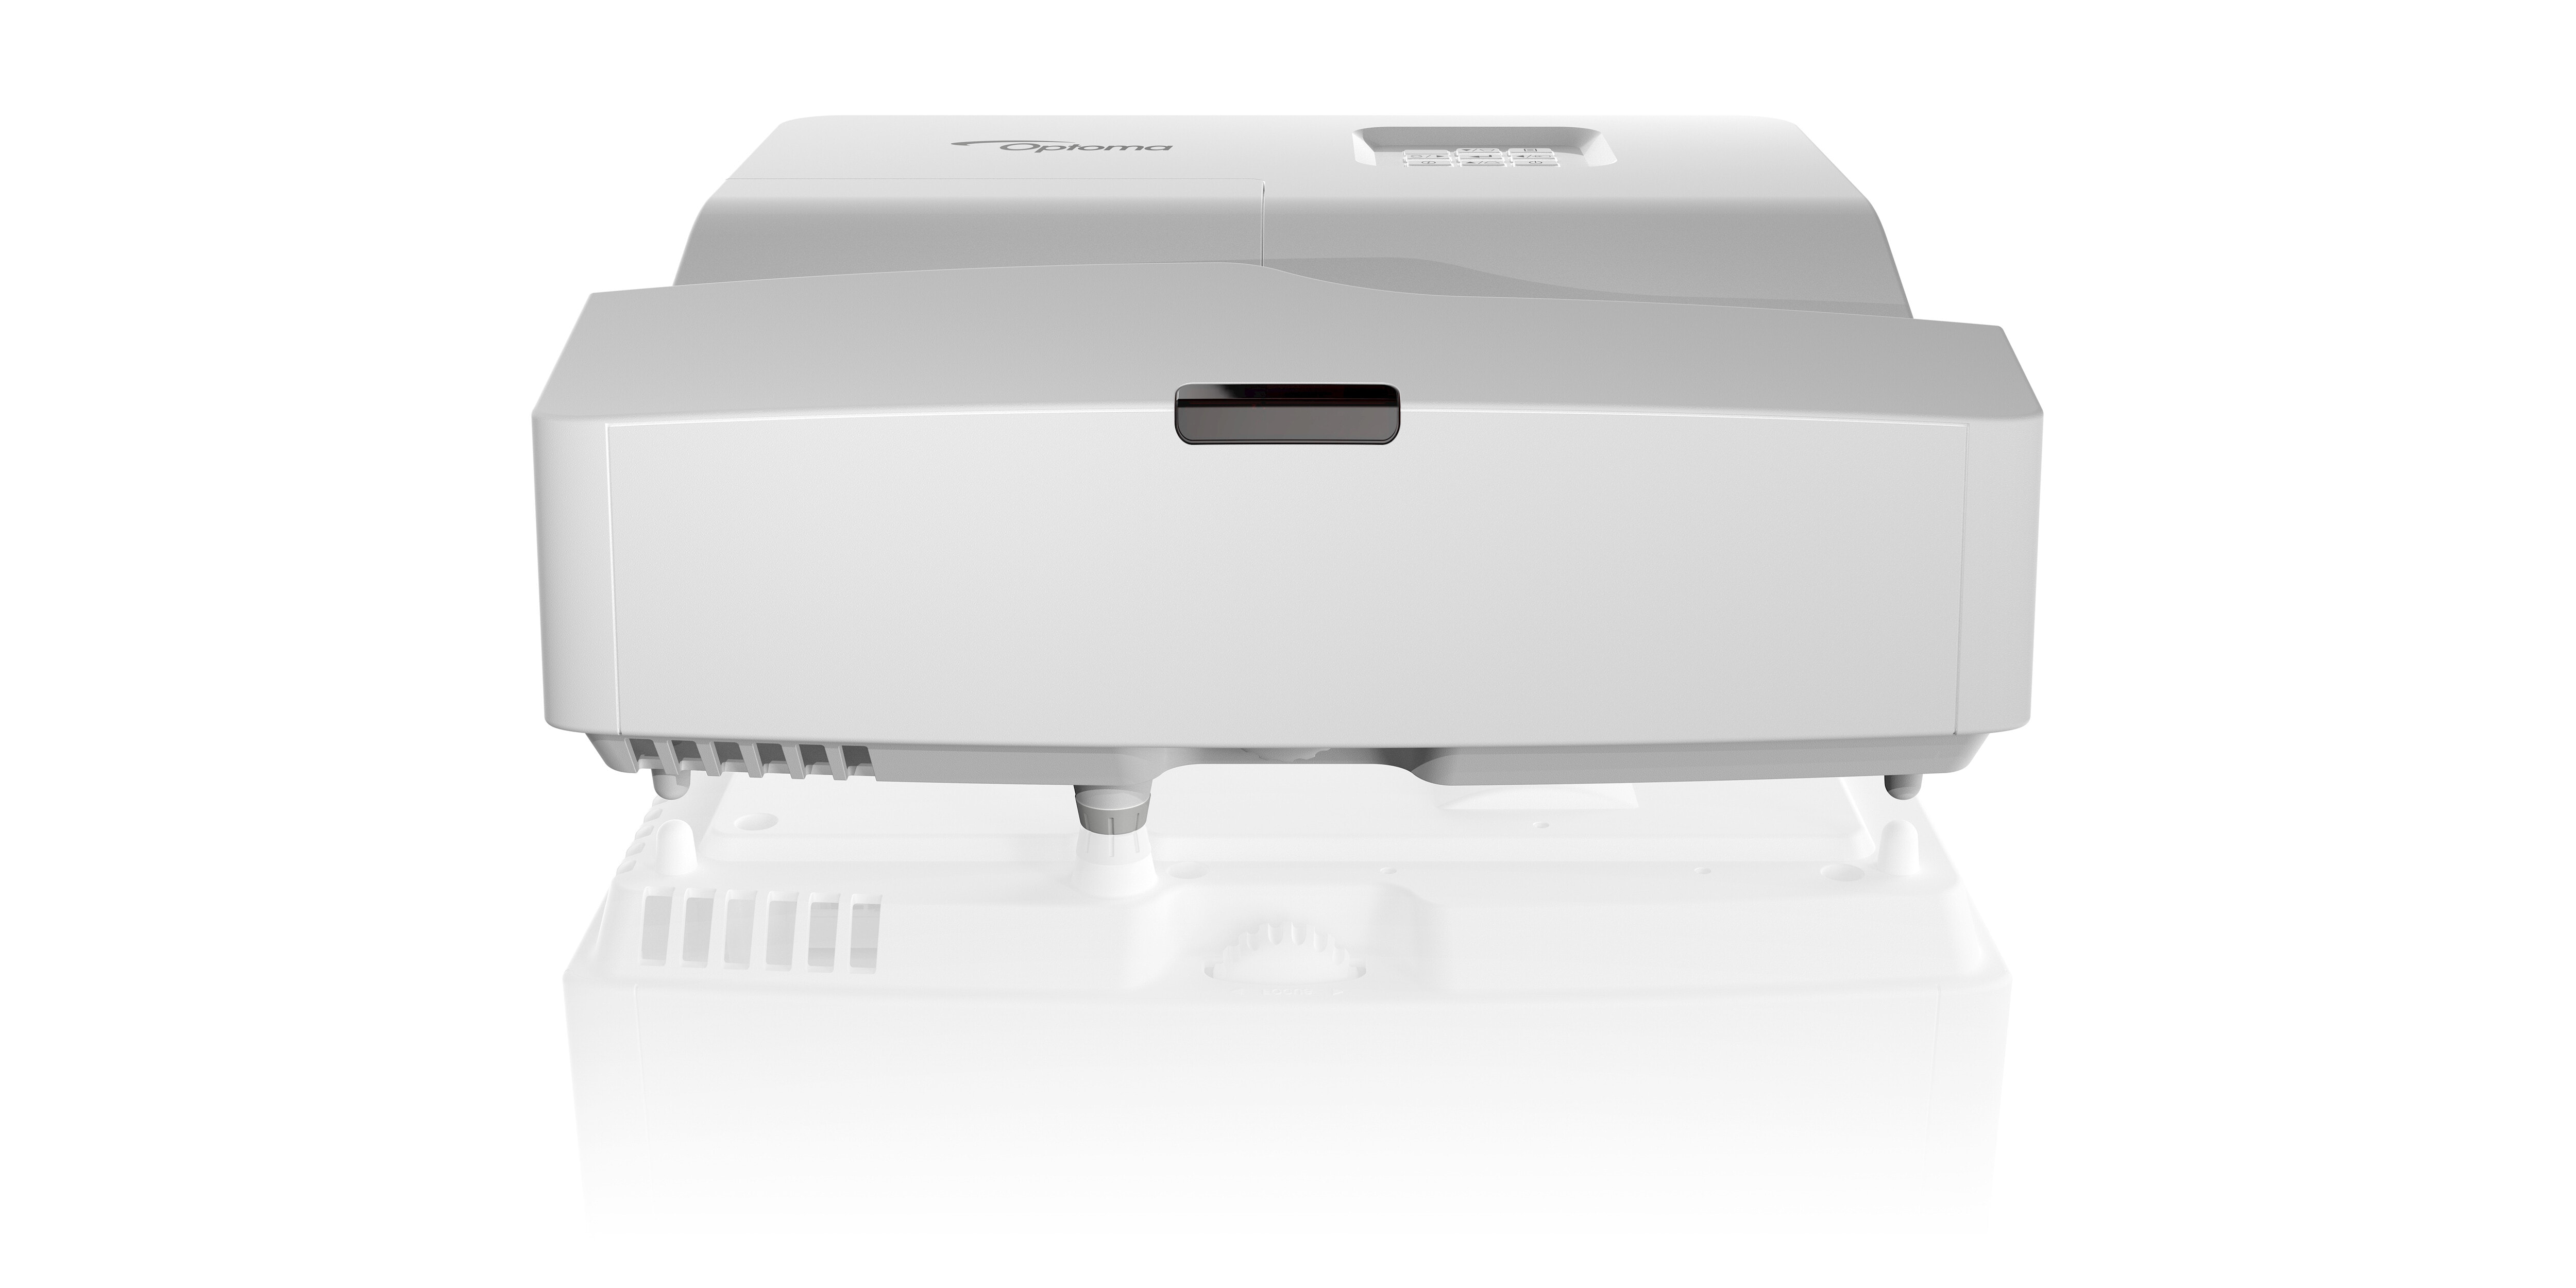 Optoma HD31UST мультимедиа-проектор 3400 лм DLP 1080p (1920x1080) 3D Настольный проектор Белый E1P0A1GWE1Z1